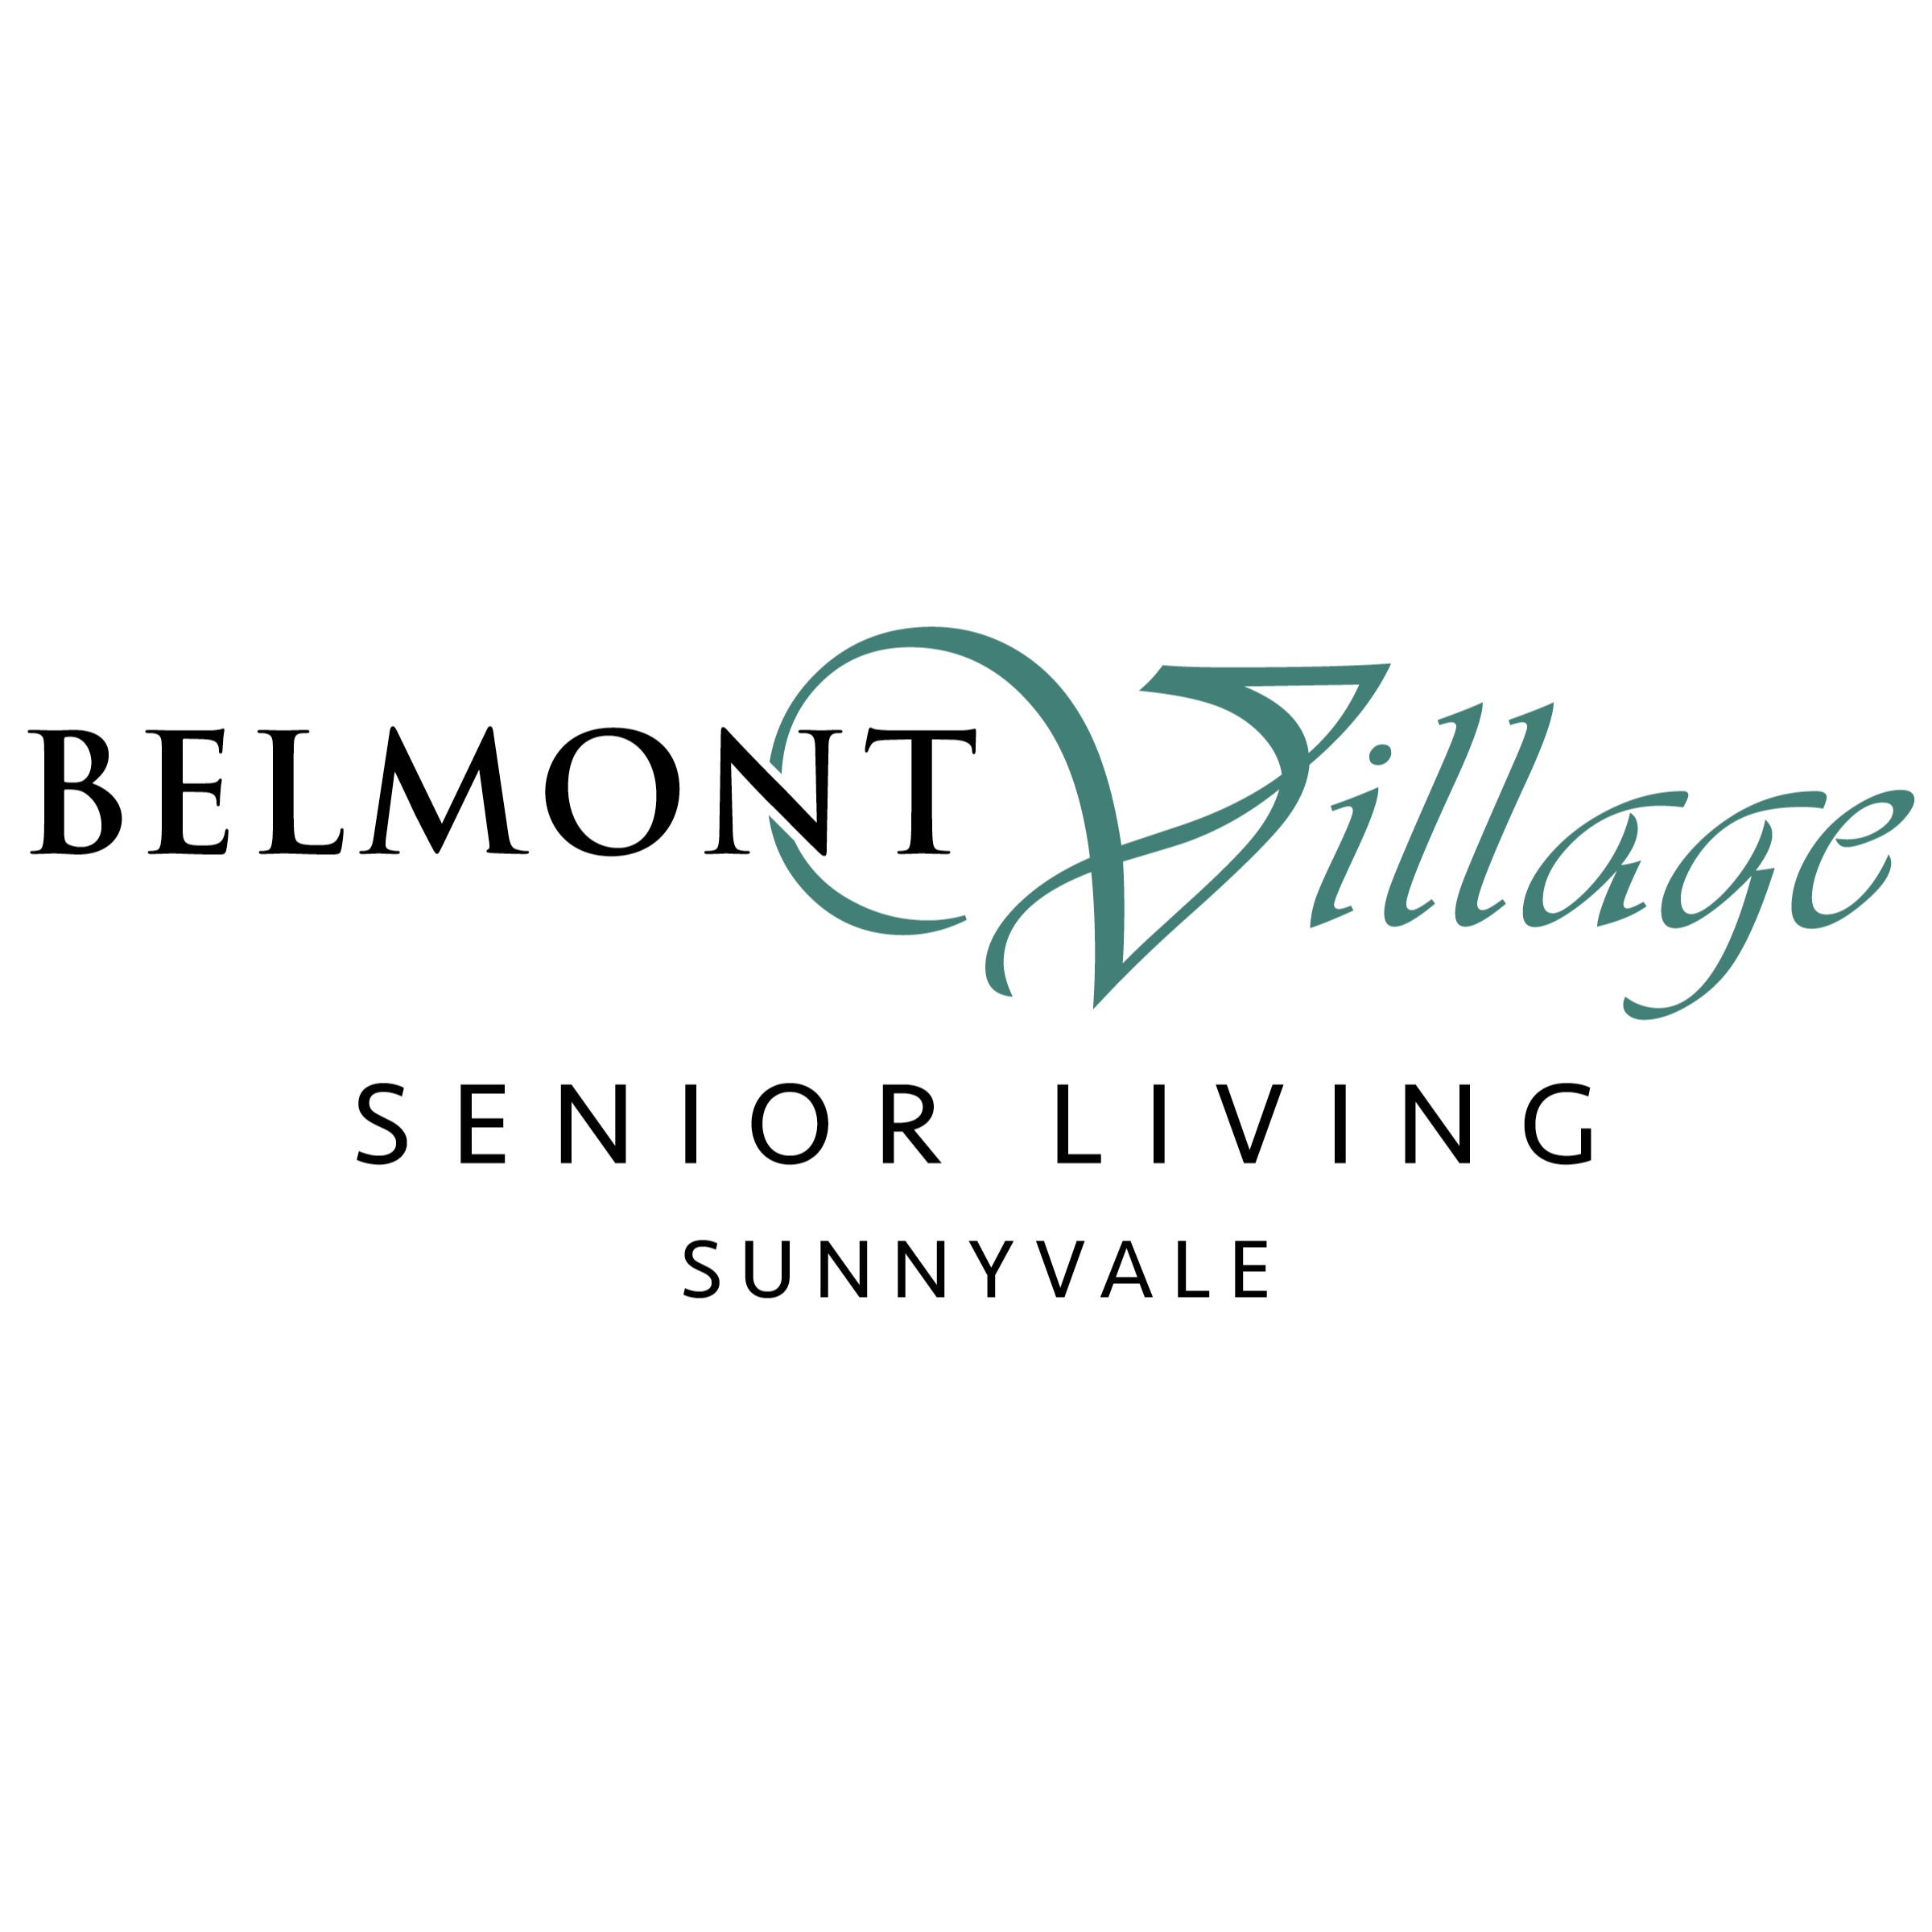 Belmont Village Senior Living Sunnyvale - Sunnyvale, CA 94087 - (408)785-6994 | ShowMeLocal.com